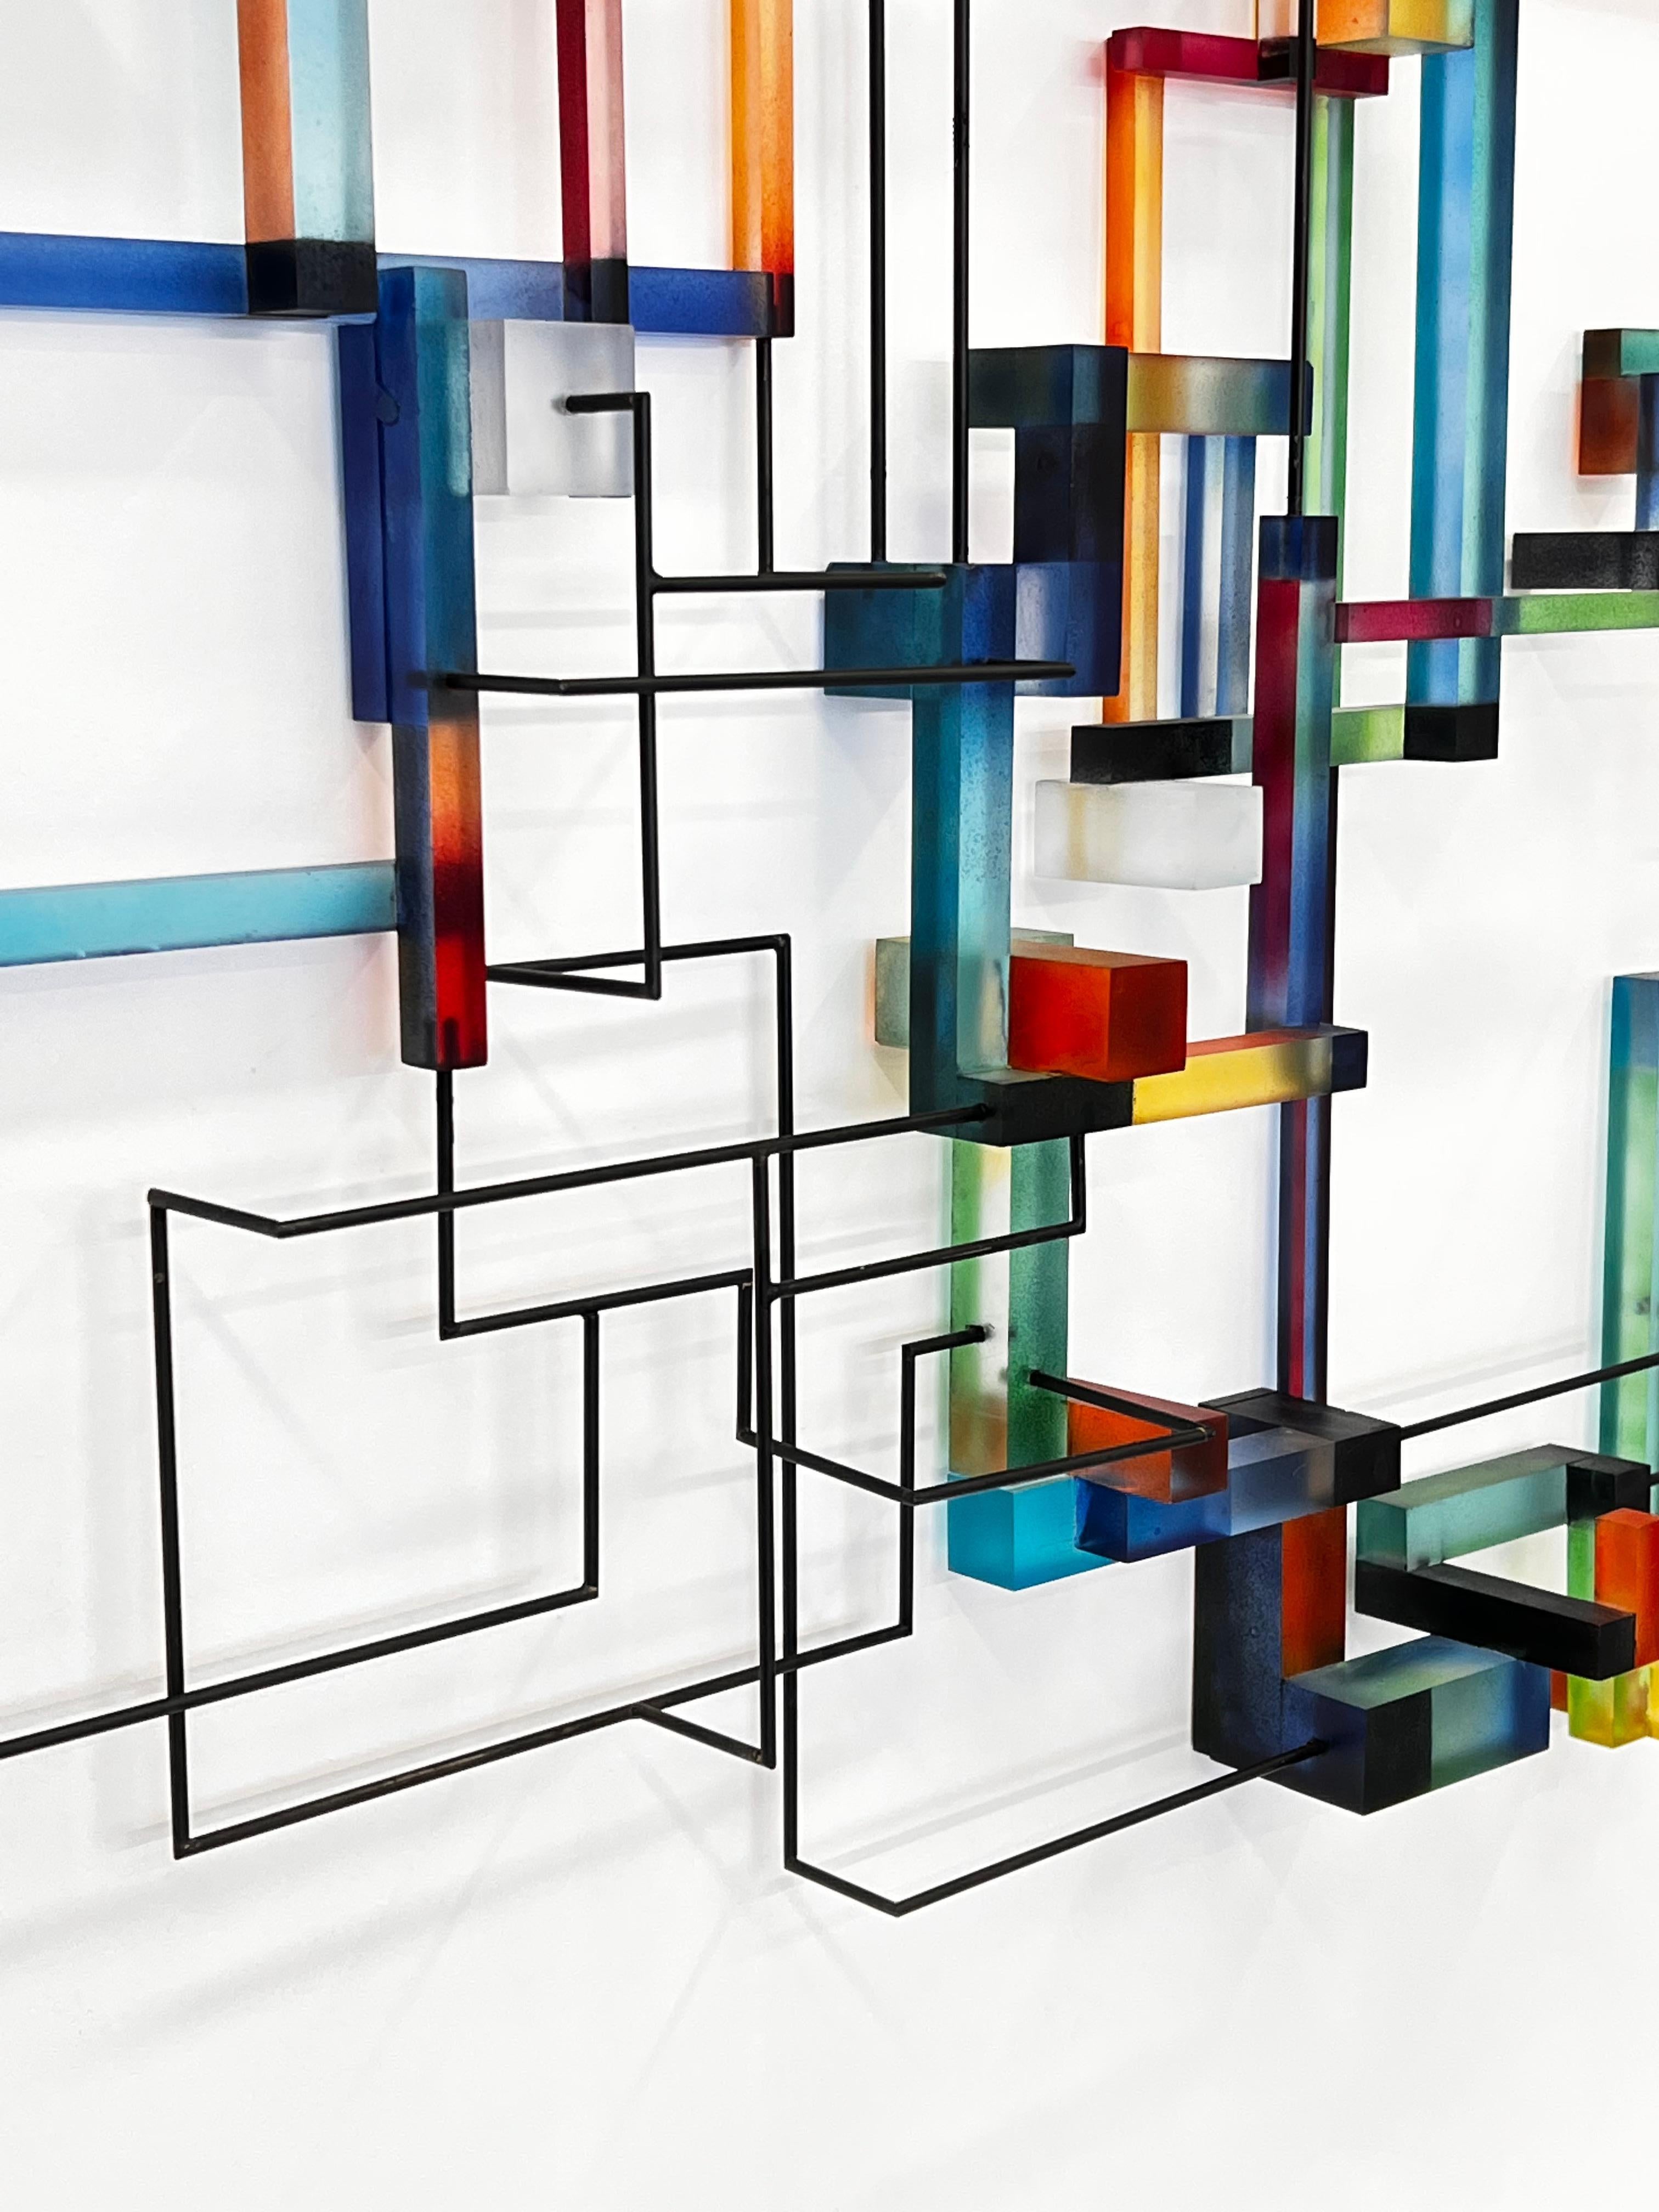 Prozor : contemporary modern abstract geometric sculpture - Abstract Geometric Sculpture by Greg Chann